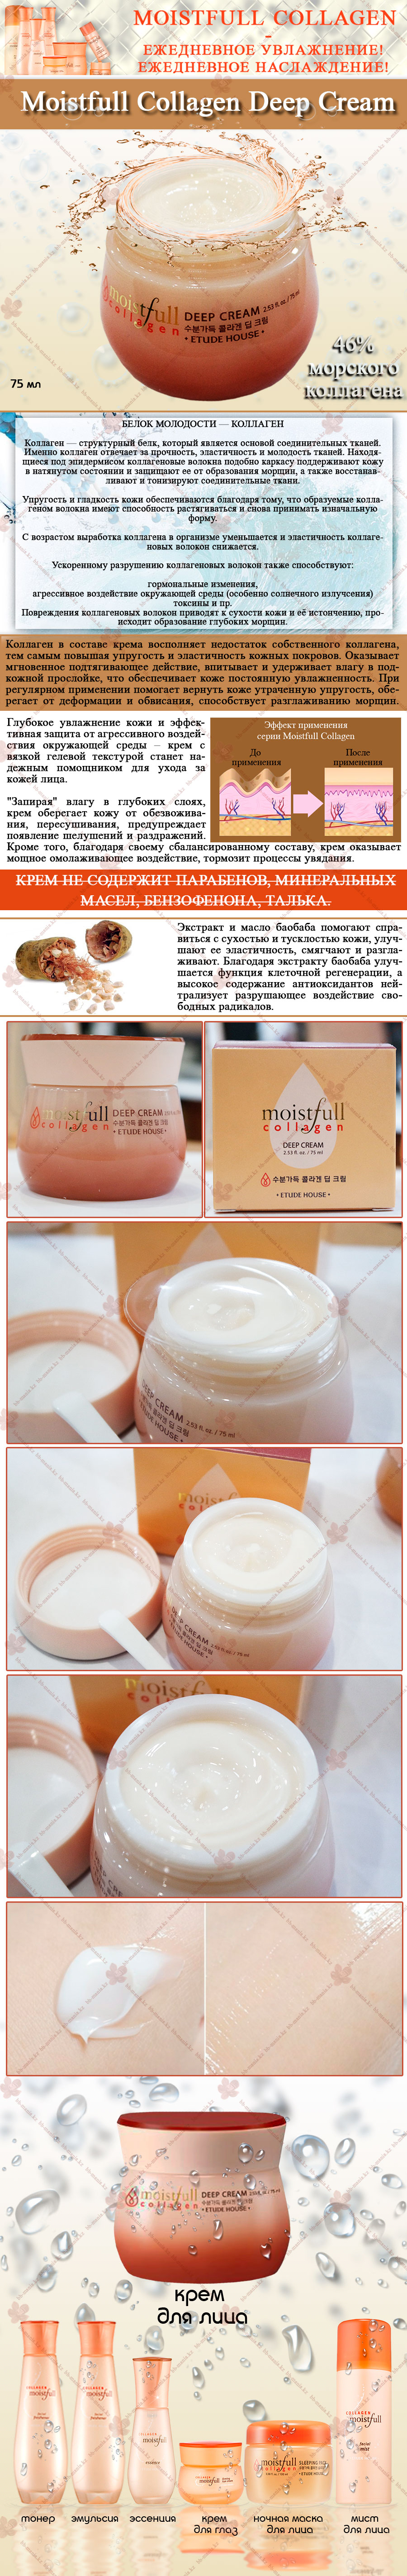 Moistfull-Collagen-Deep-Cream-[Etude-House]-min